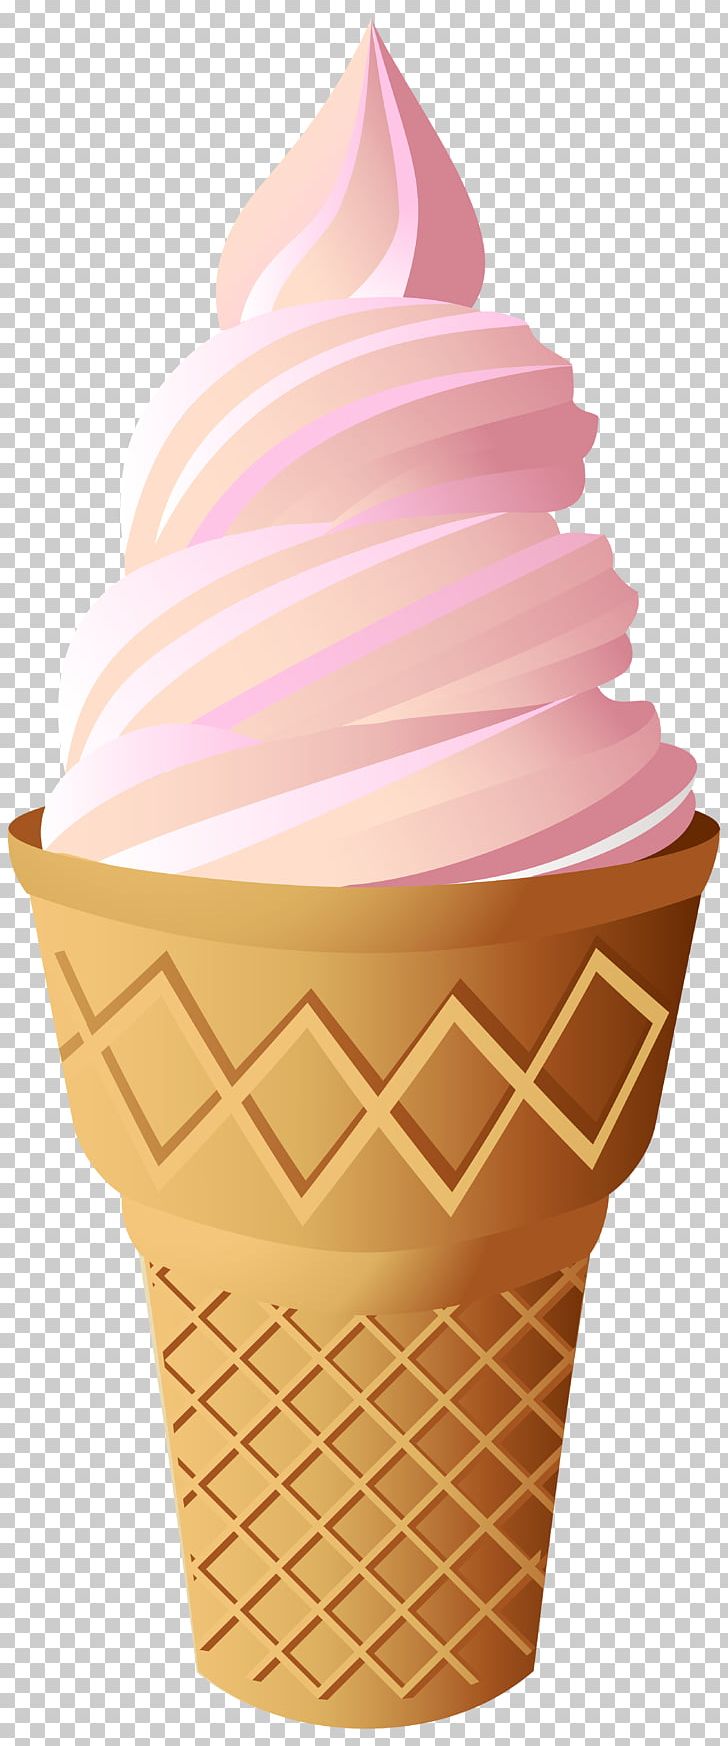 Ice Cream Cones Cupcake Neapolitan Ice Cream PNG, Clipart, Baking Cup, Chocolate Ice Cream, Cones, Cream, Cup Free PNG Download